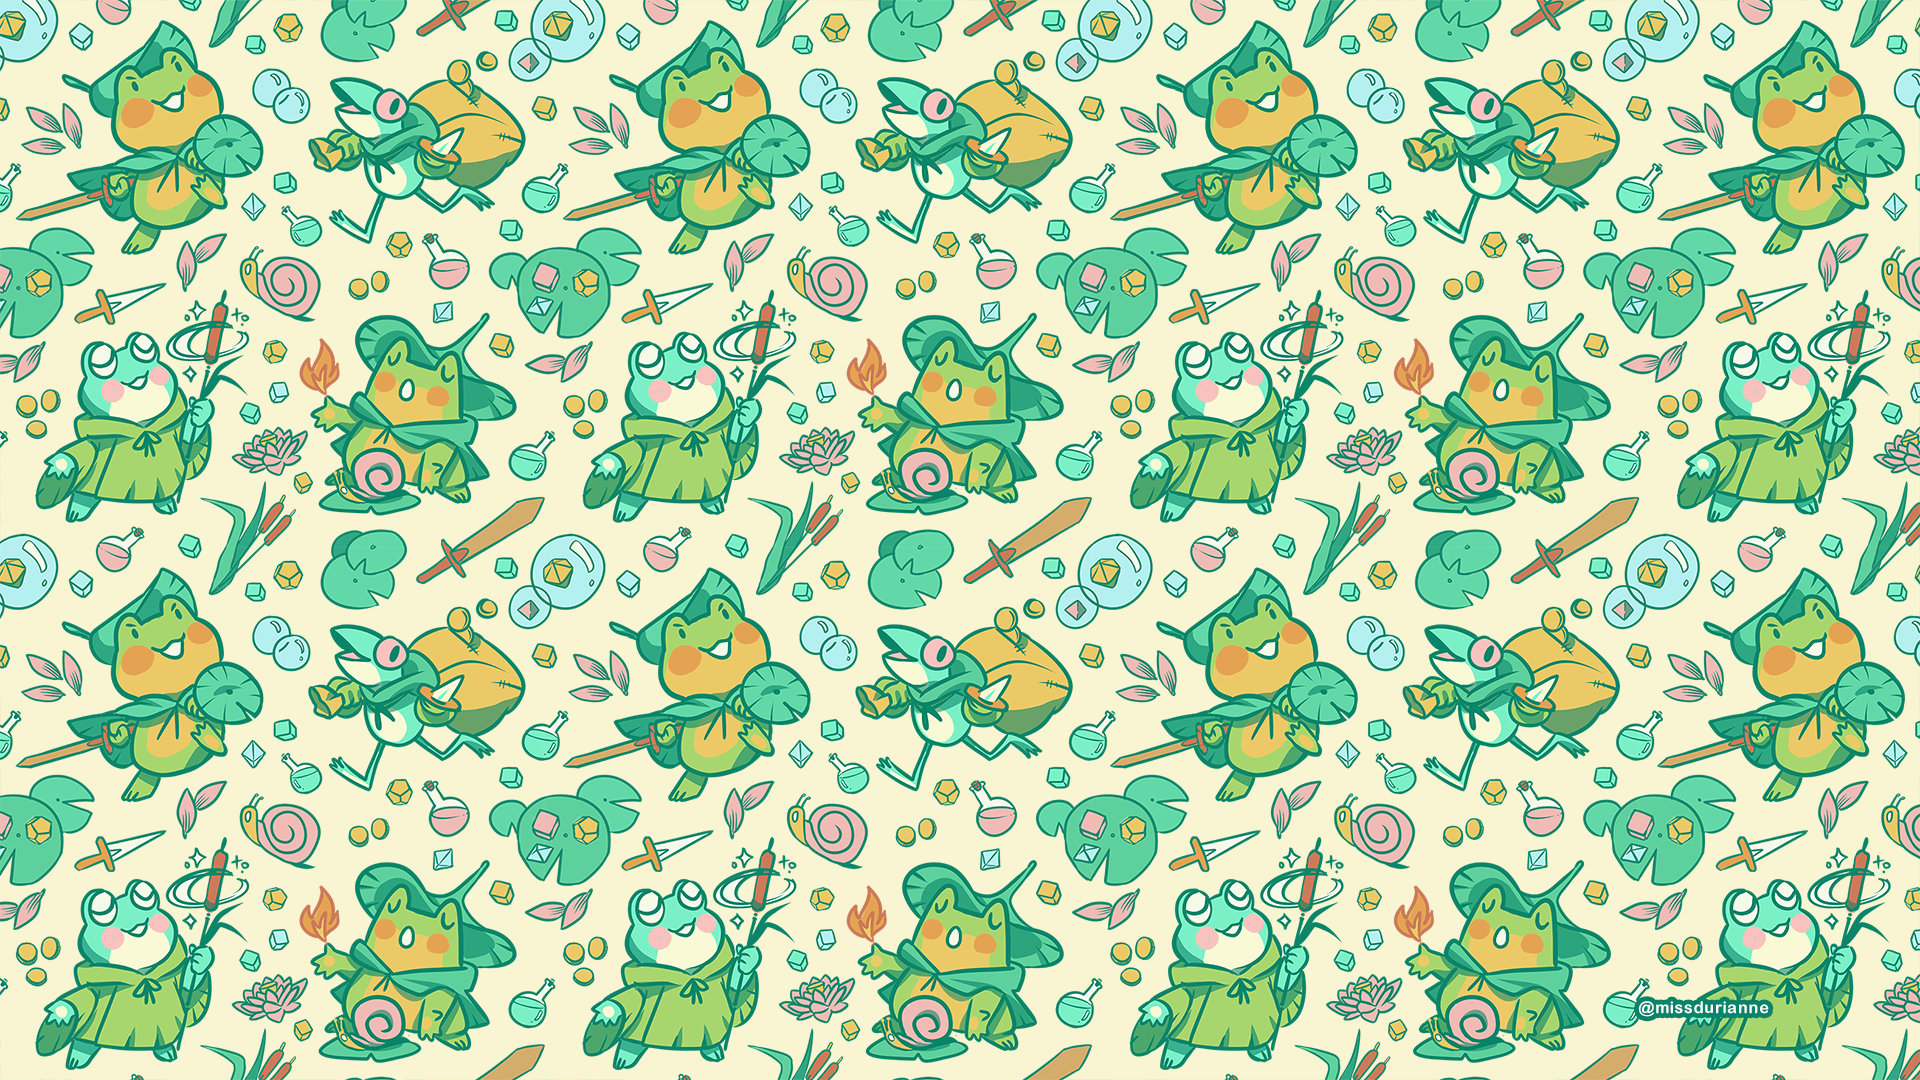 RPG Frogs Digital Wallpaper desktop and iPhone